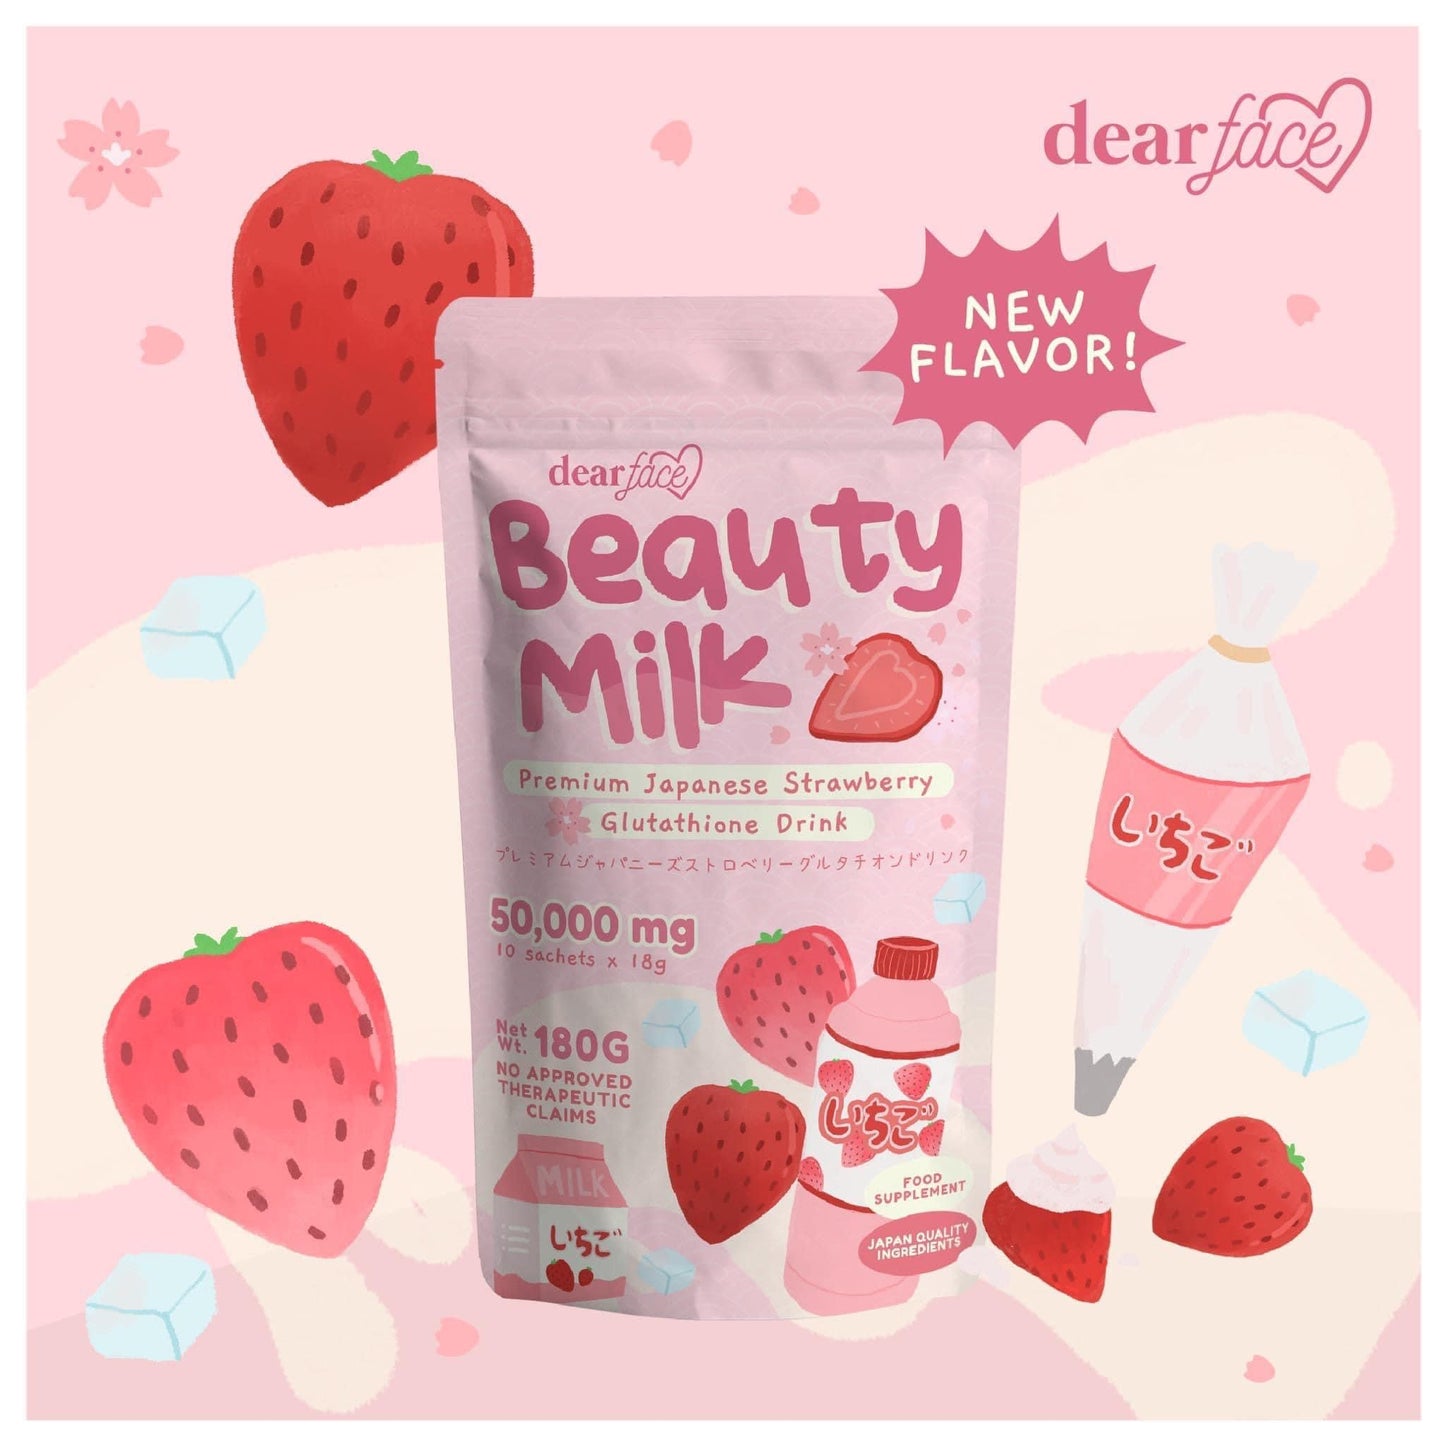 Dear face Beauty Milk Melon and Strawberry Combo